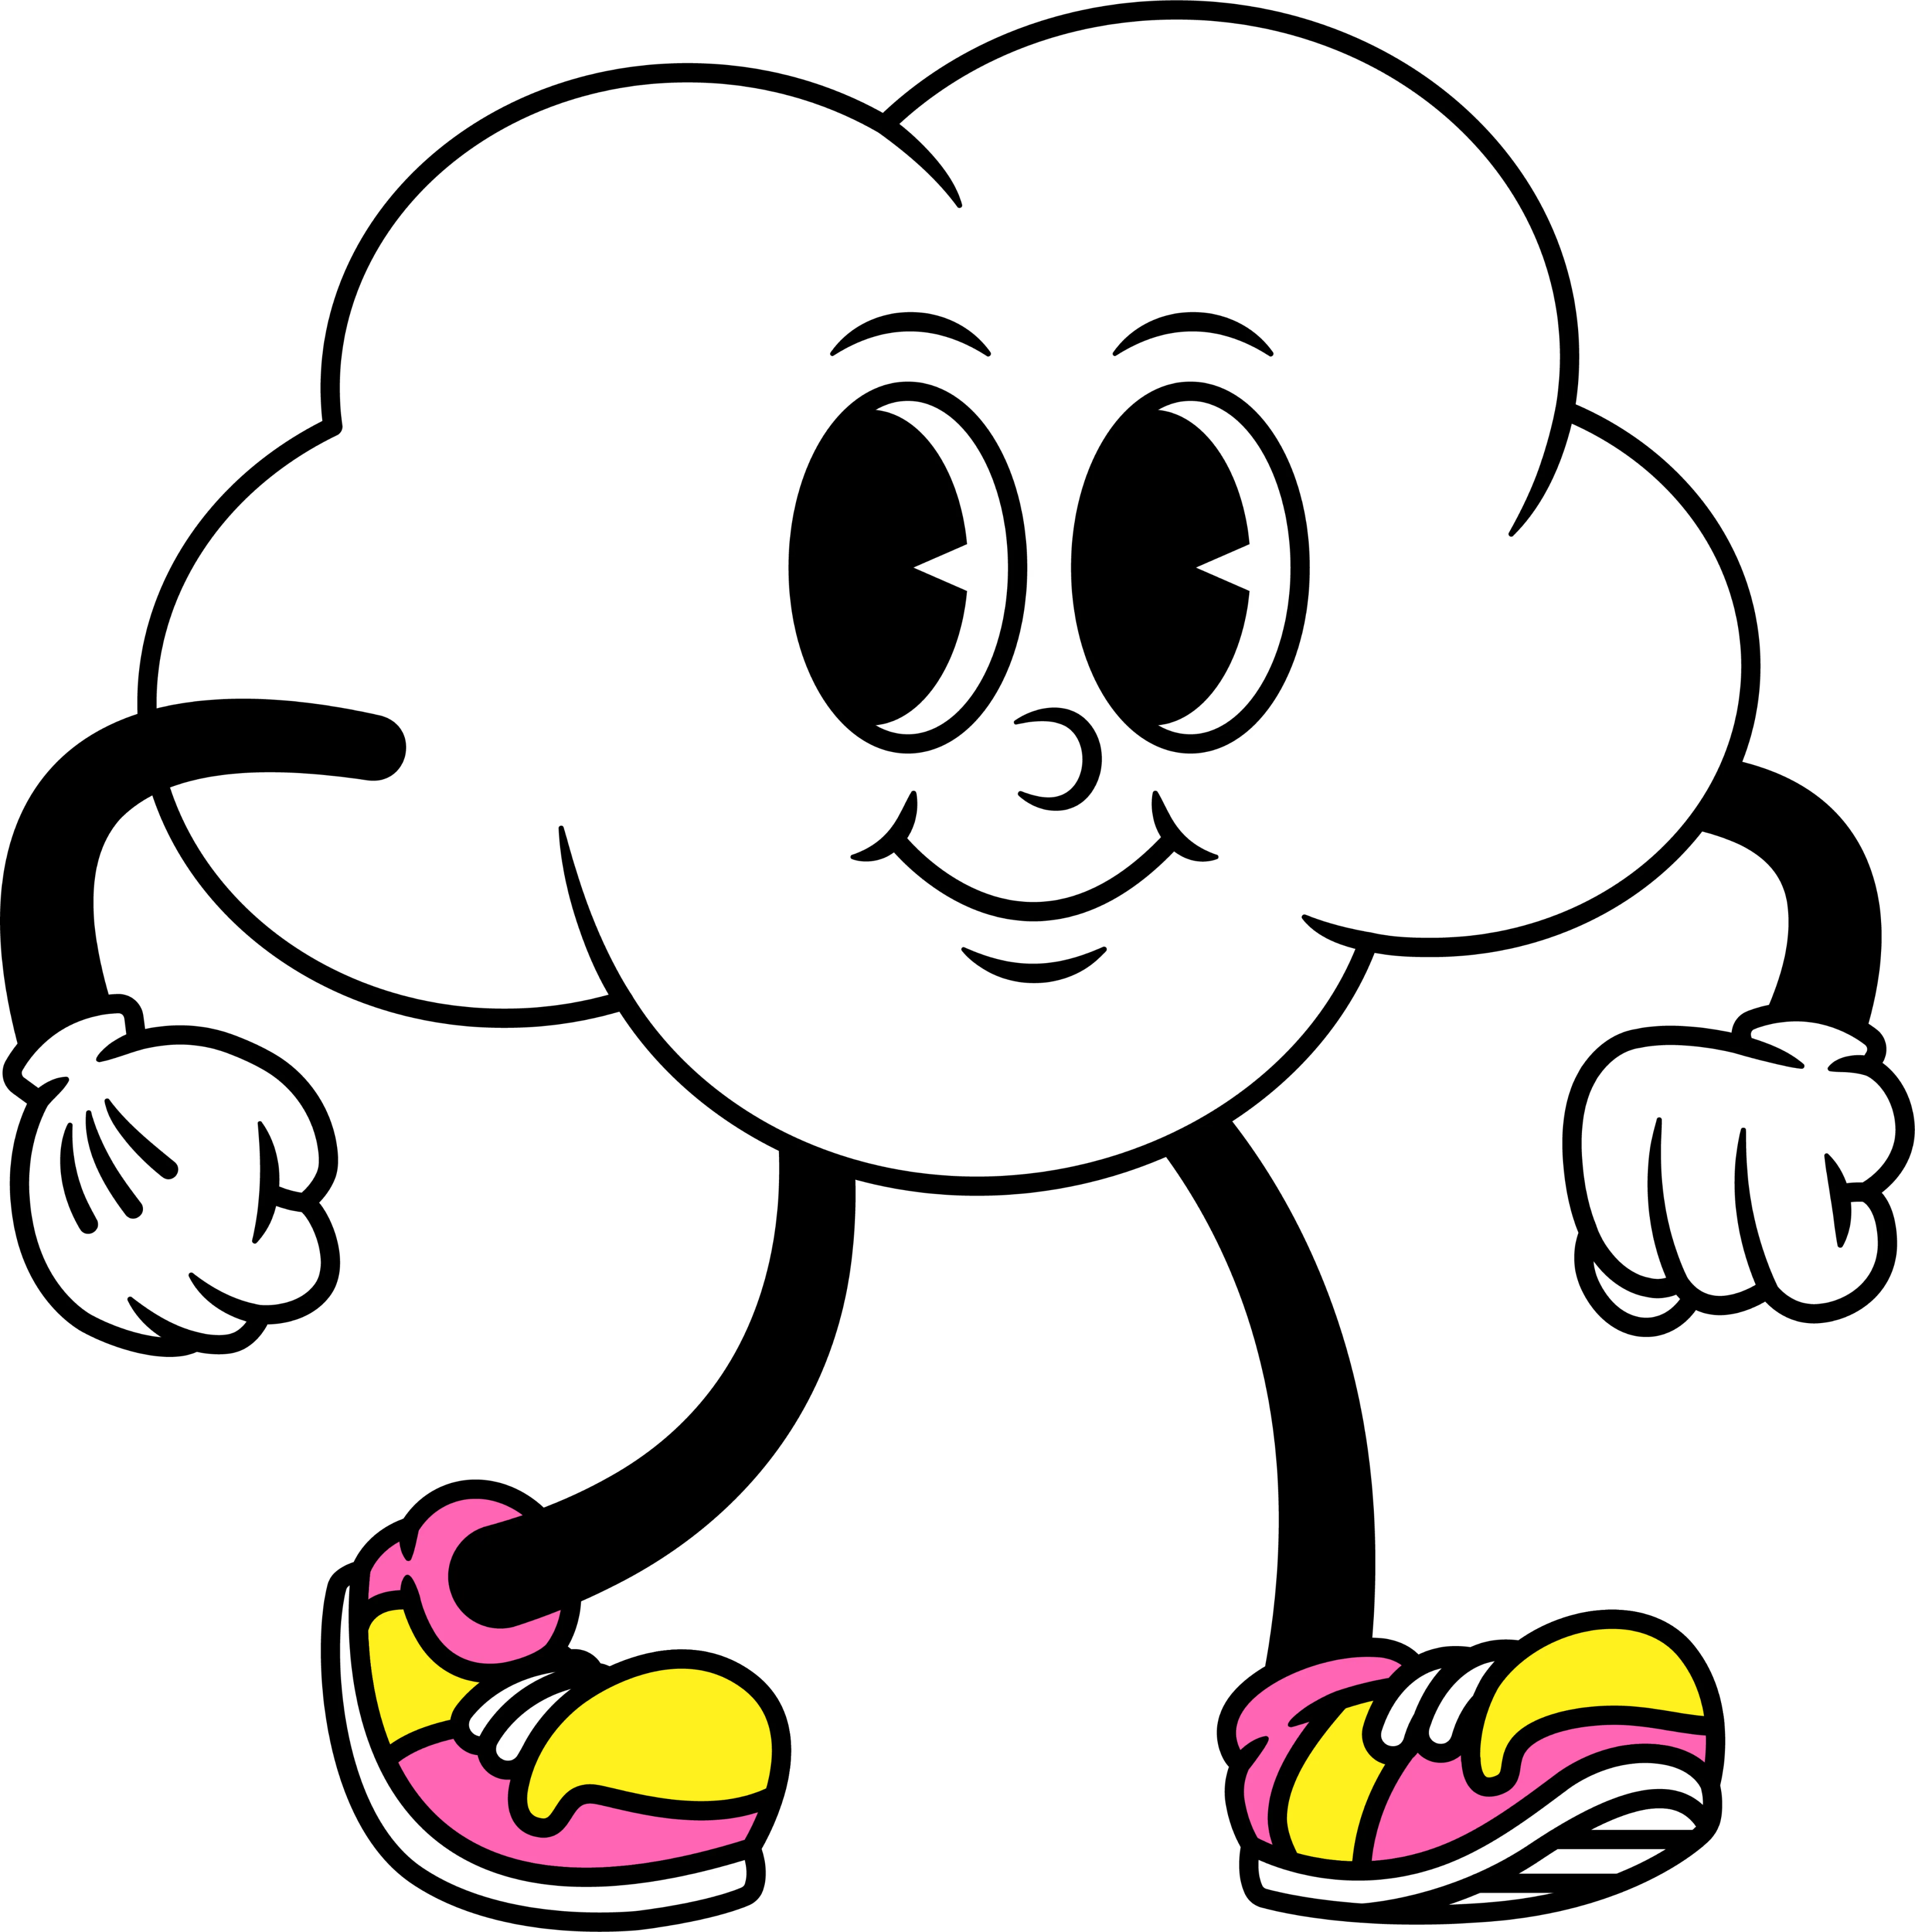 Cloud cartoon character